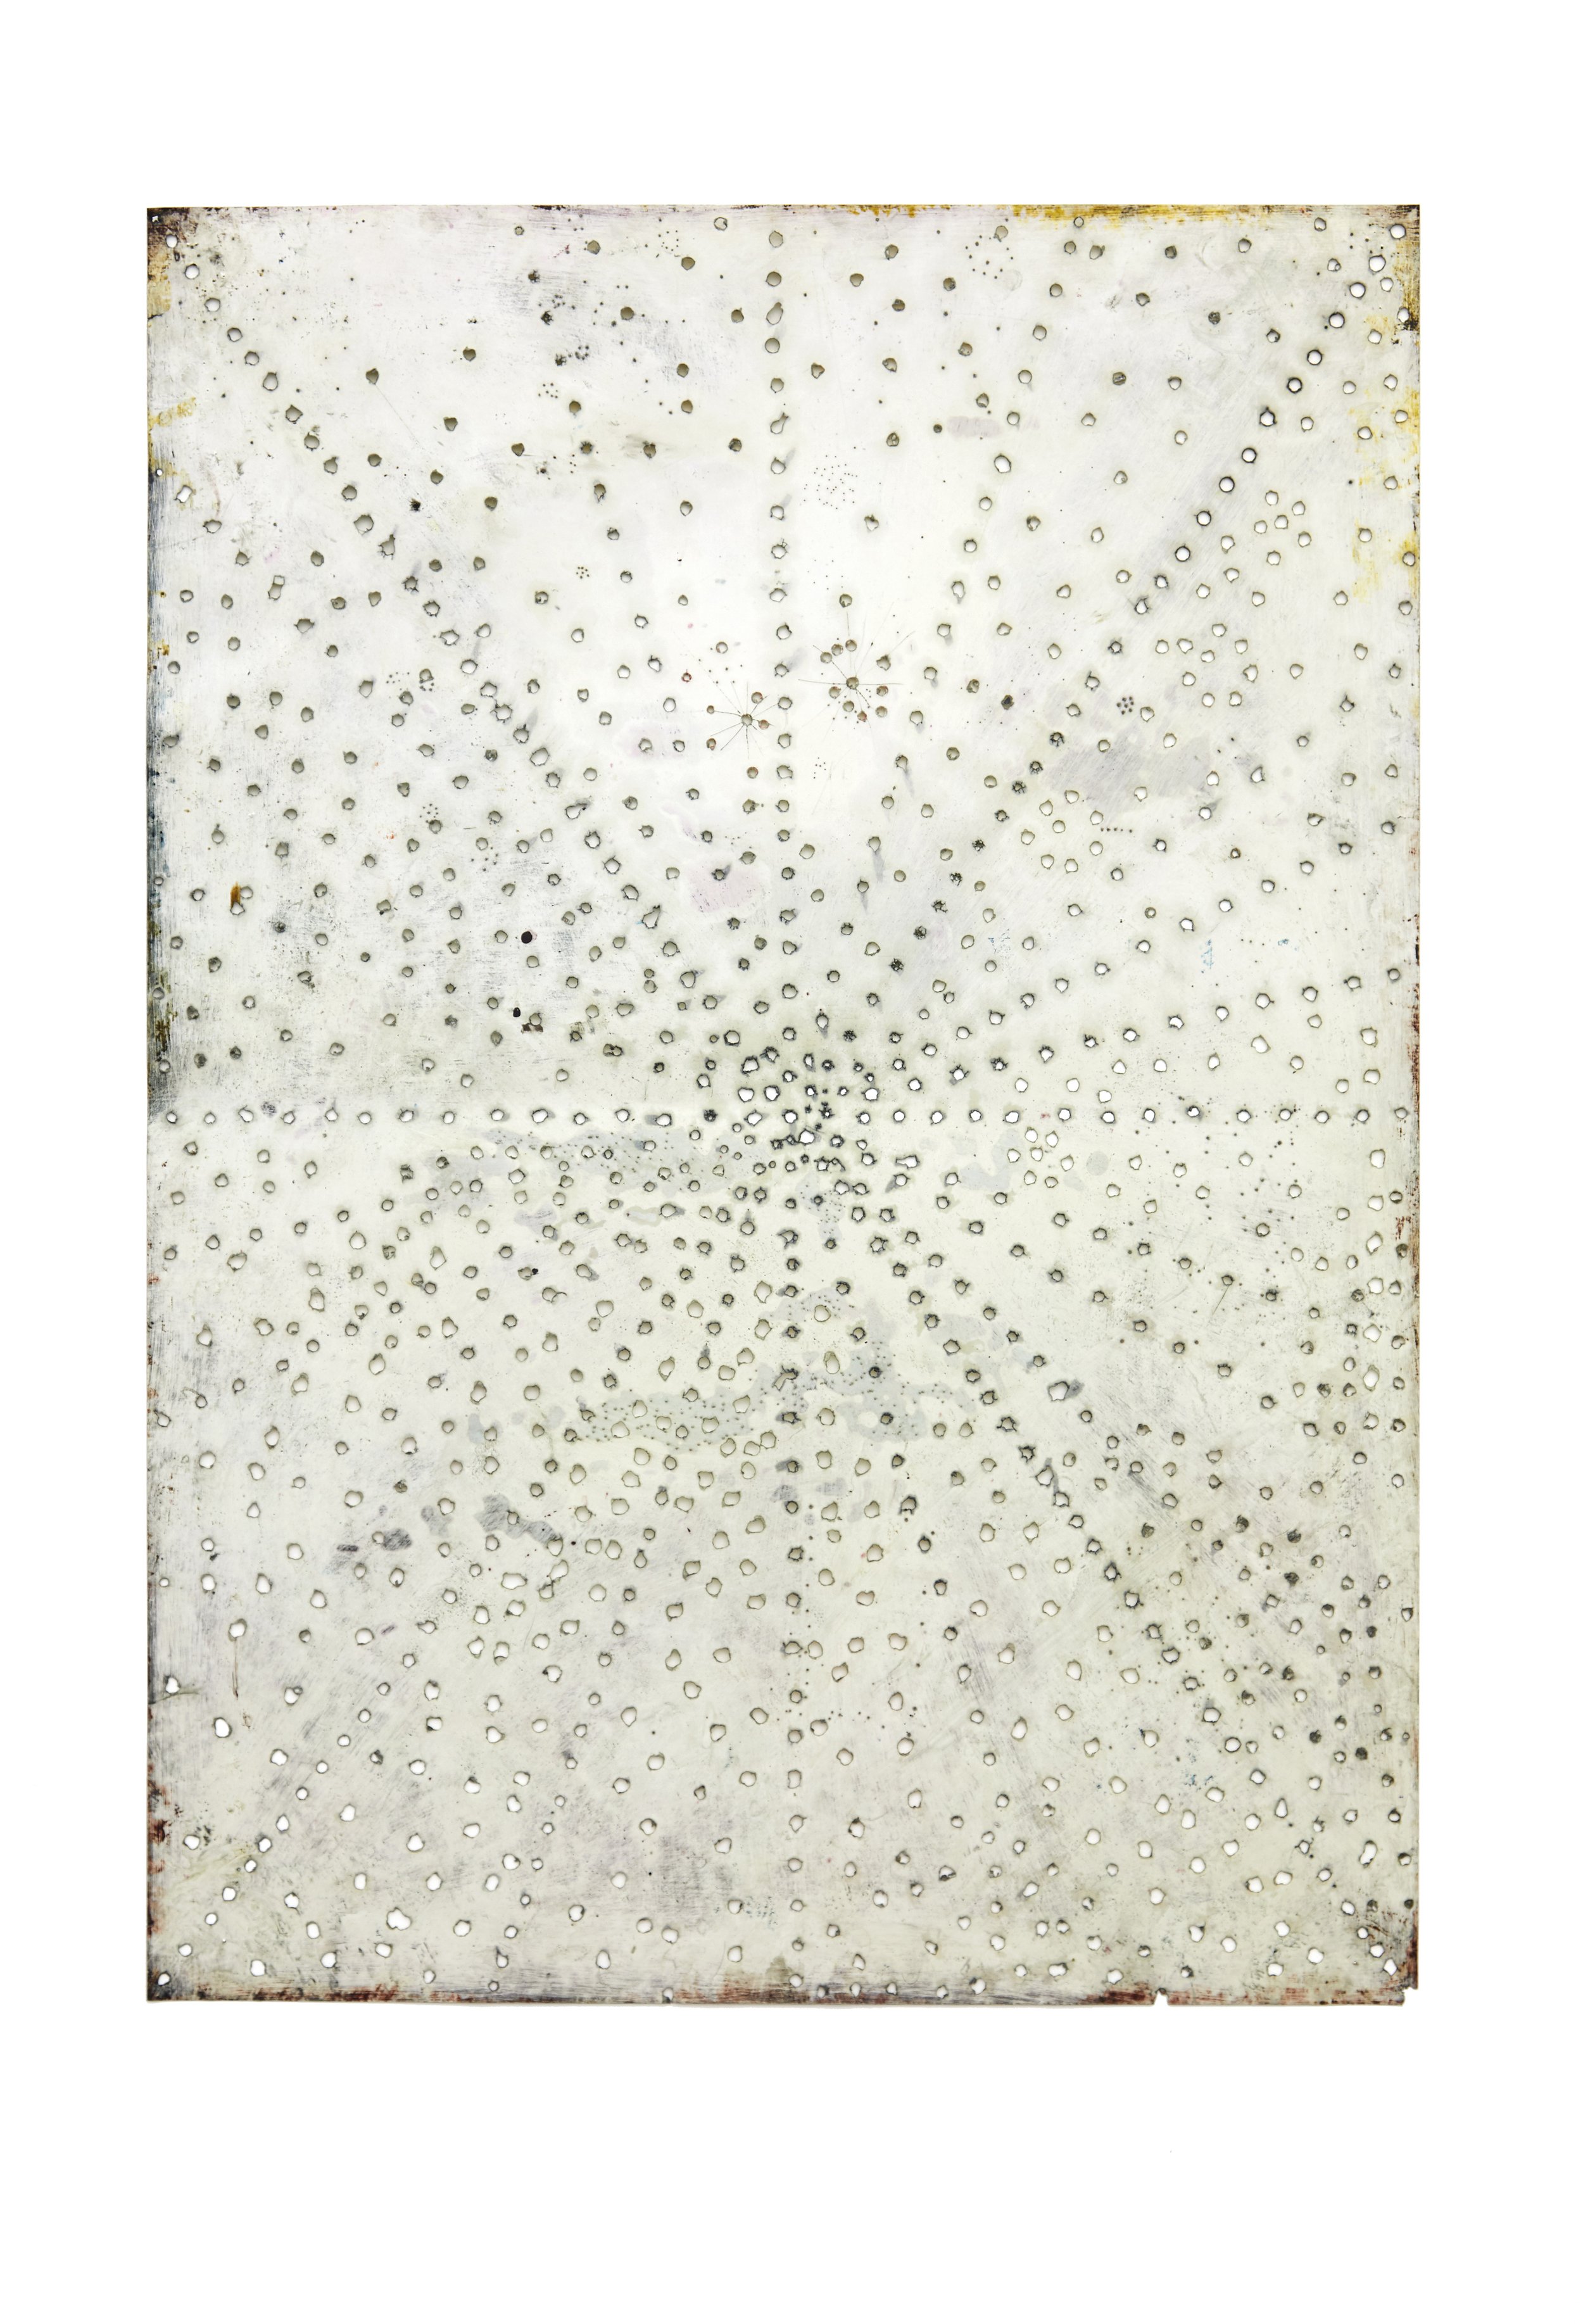  Sieve, 2022, oil on paper, 102 x 72 cm 